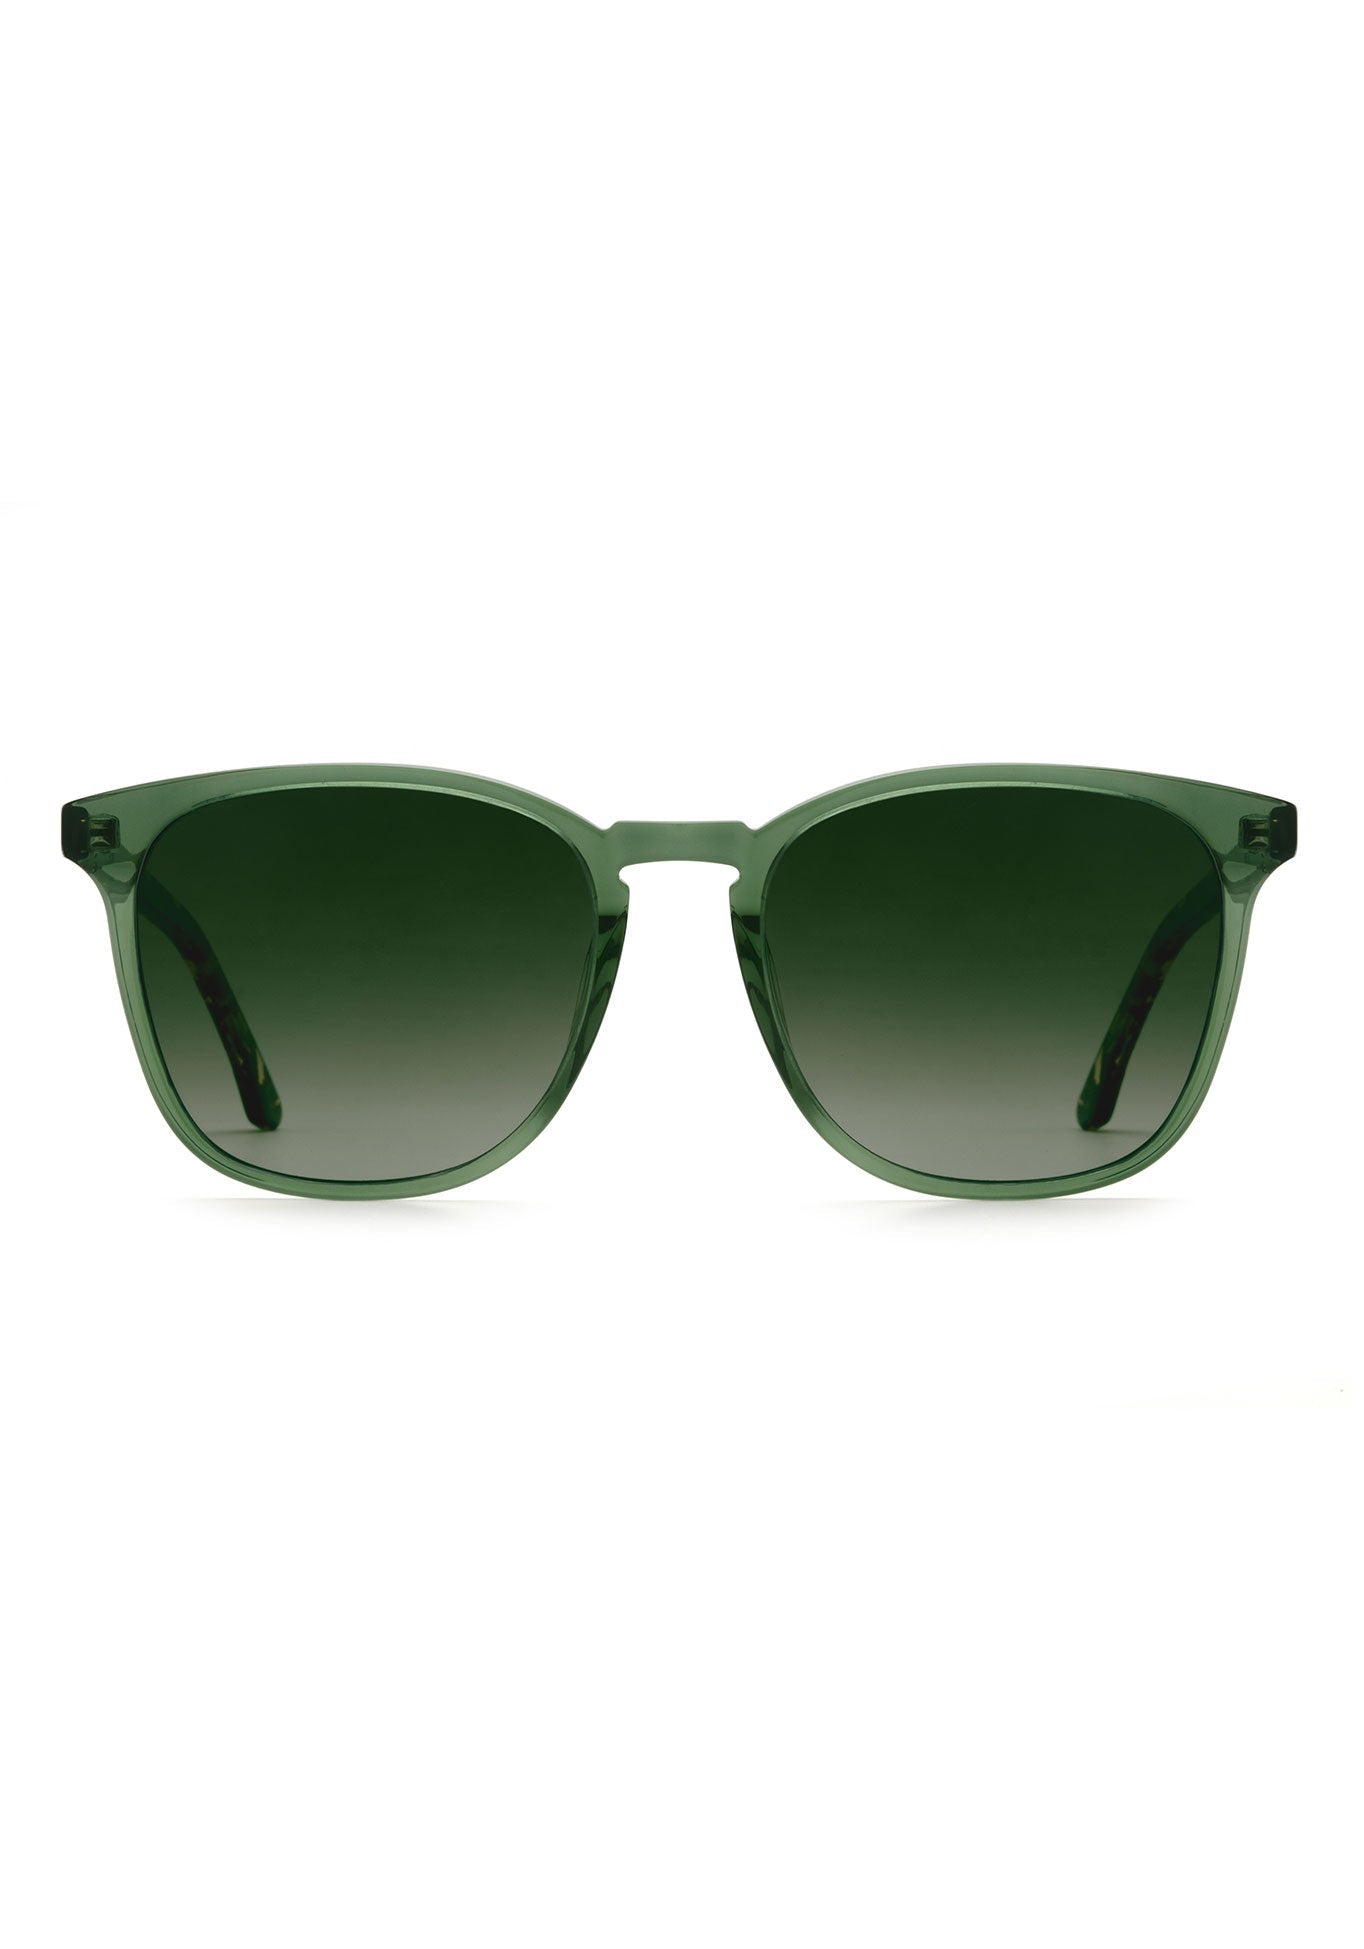 Buy online David Blake Black Aviator Sunglasses from Eyewear for Men by David  Blake for ₹1159 at 60% off | 2024 Limeroad.com